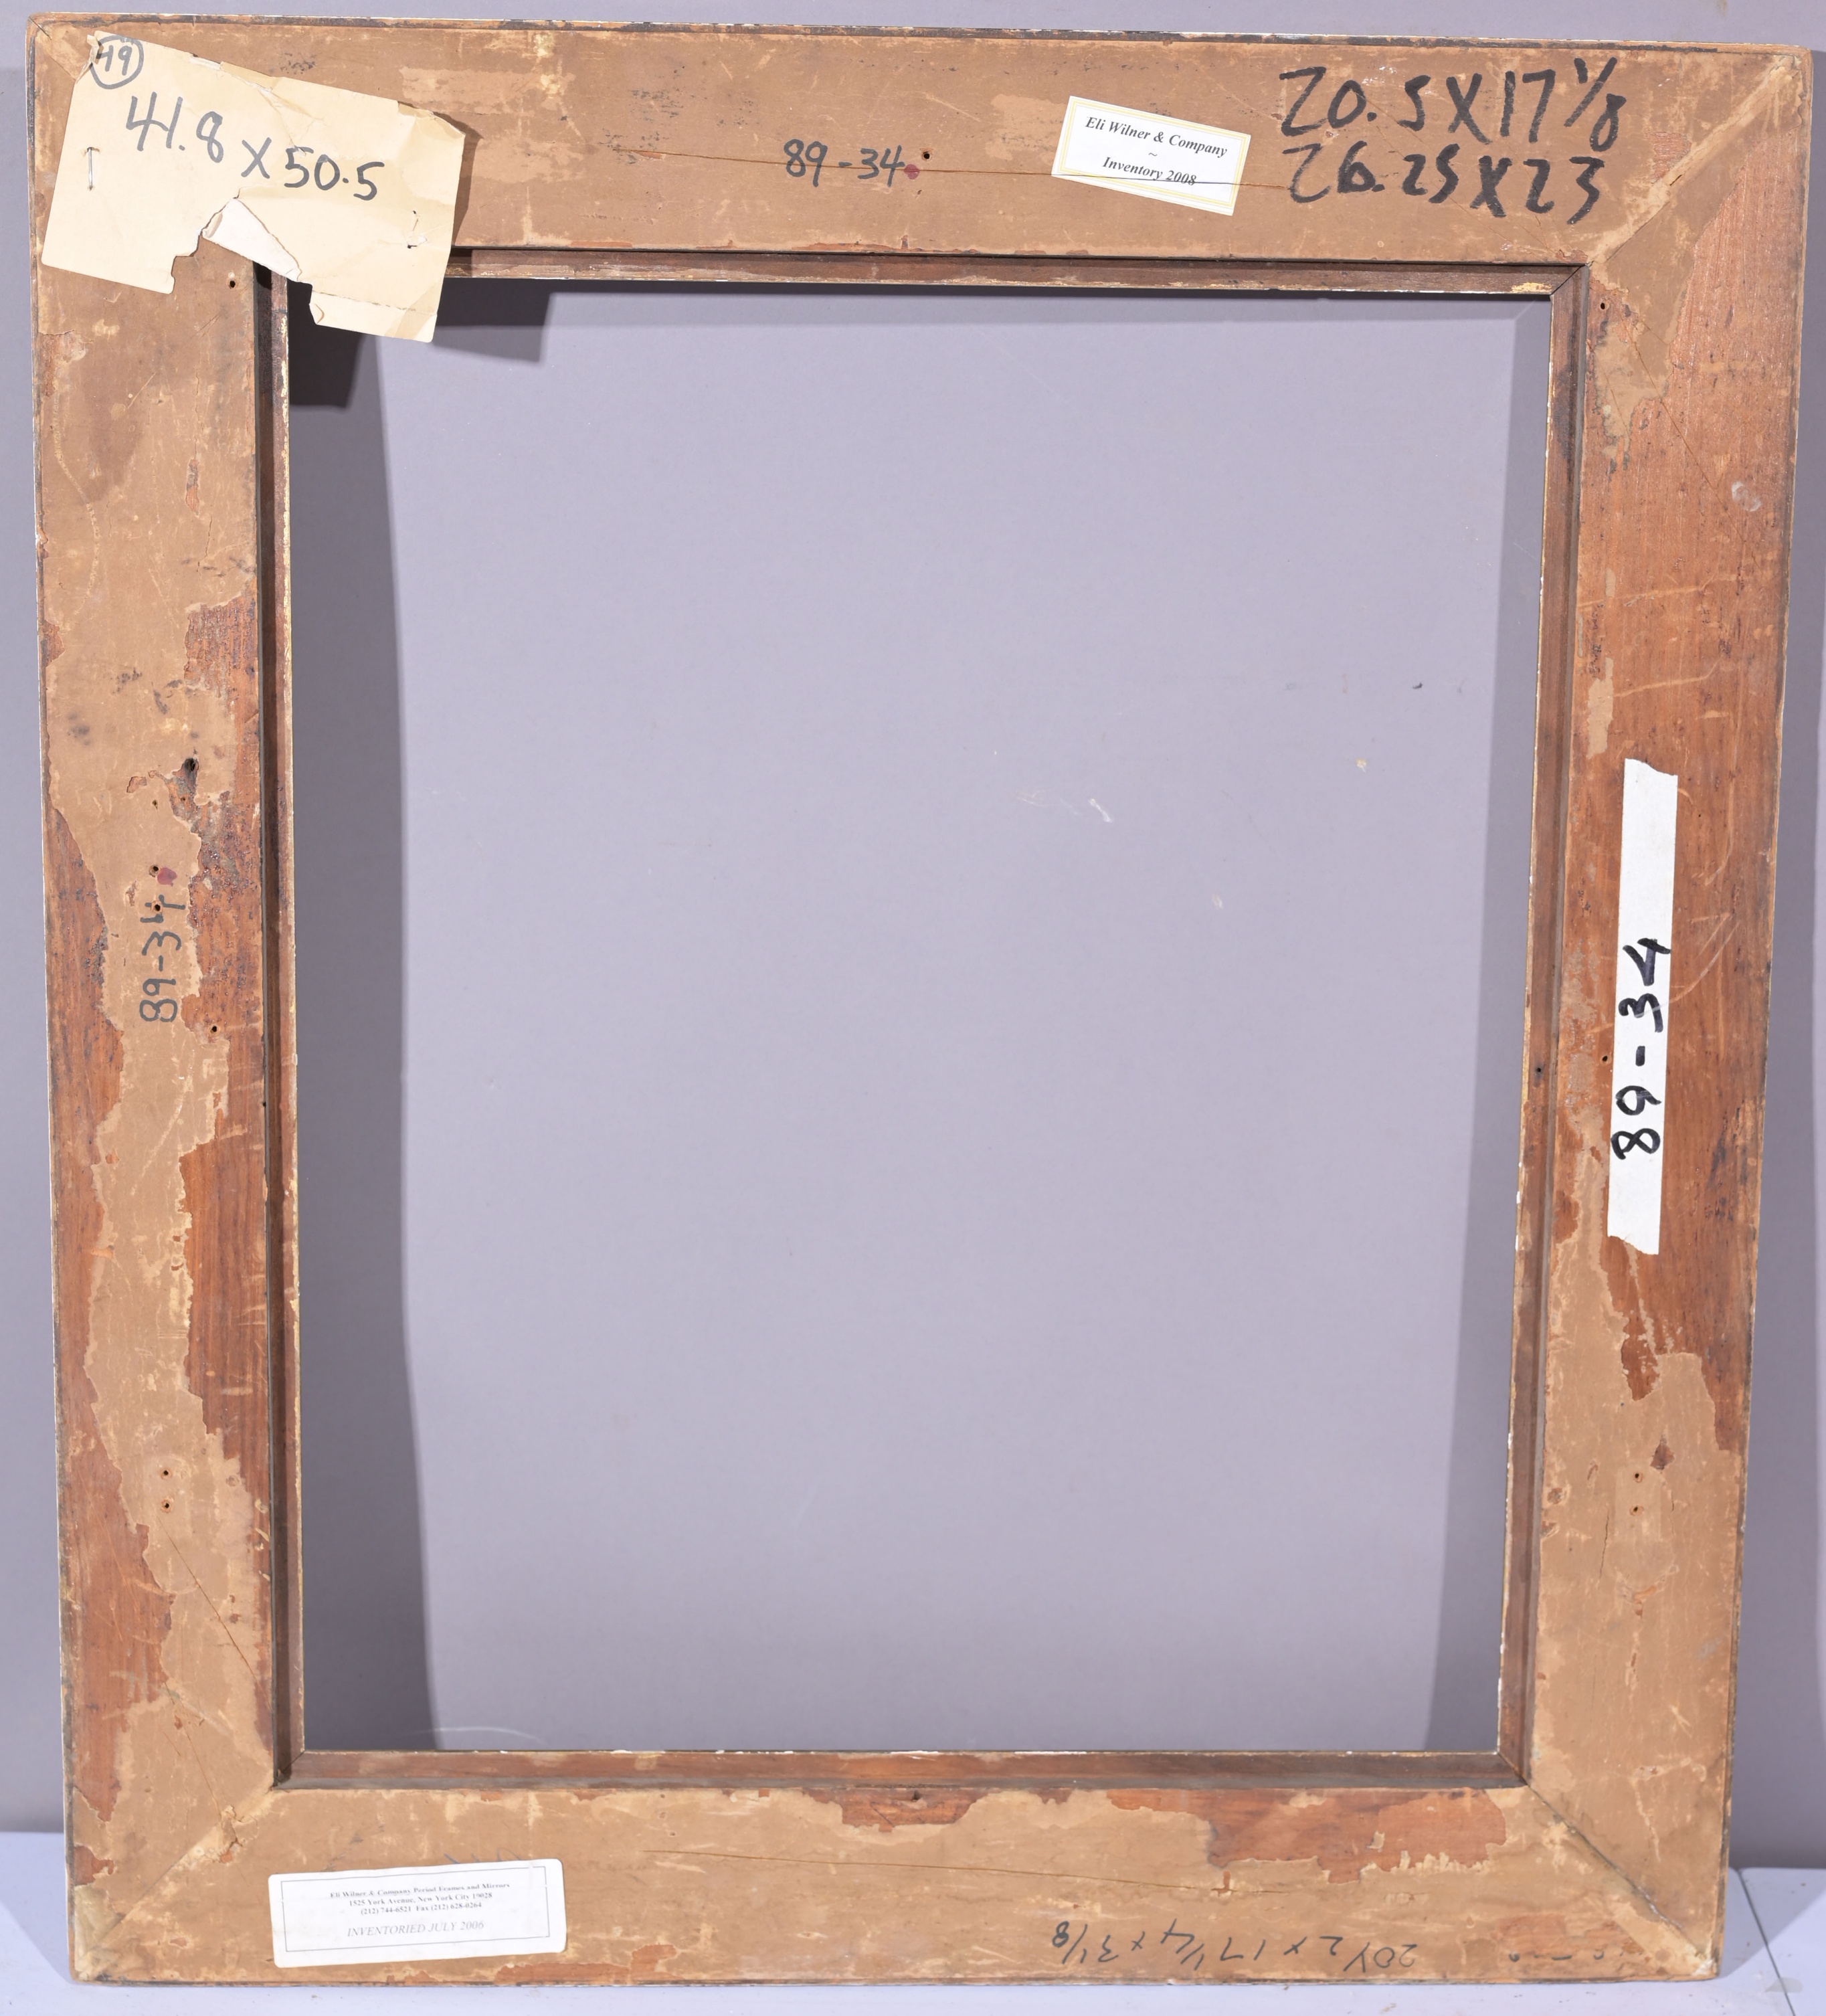 19th C. American School Gilt Frame - 20.5 x 17 1/8 - Image 7 of 7